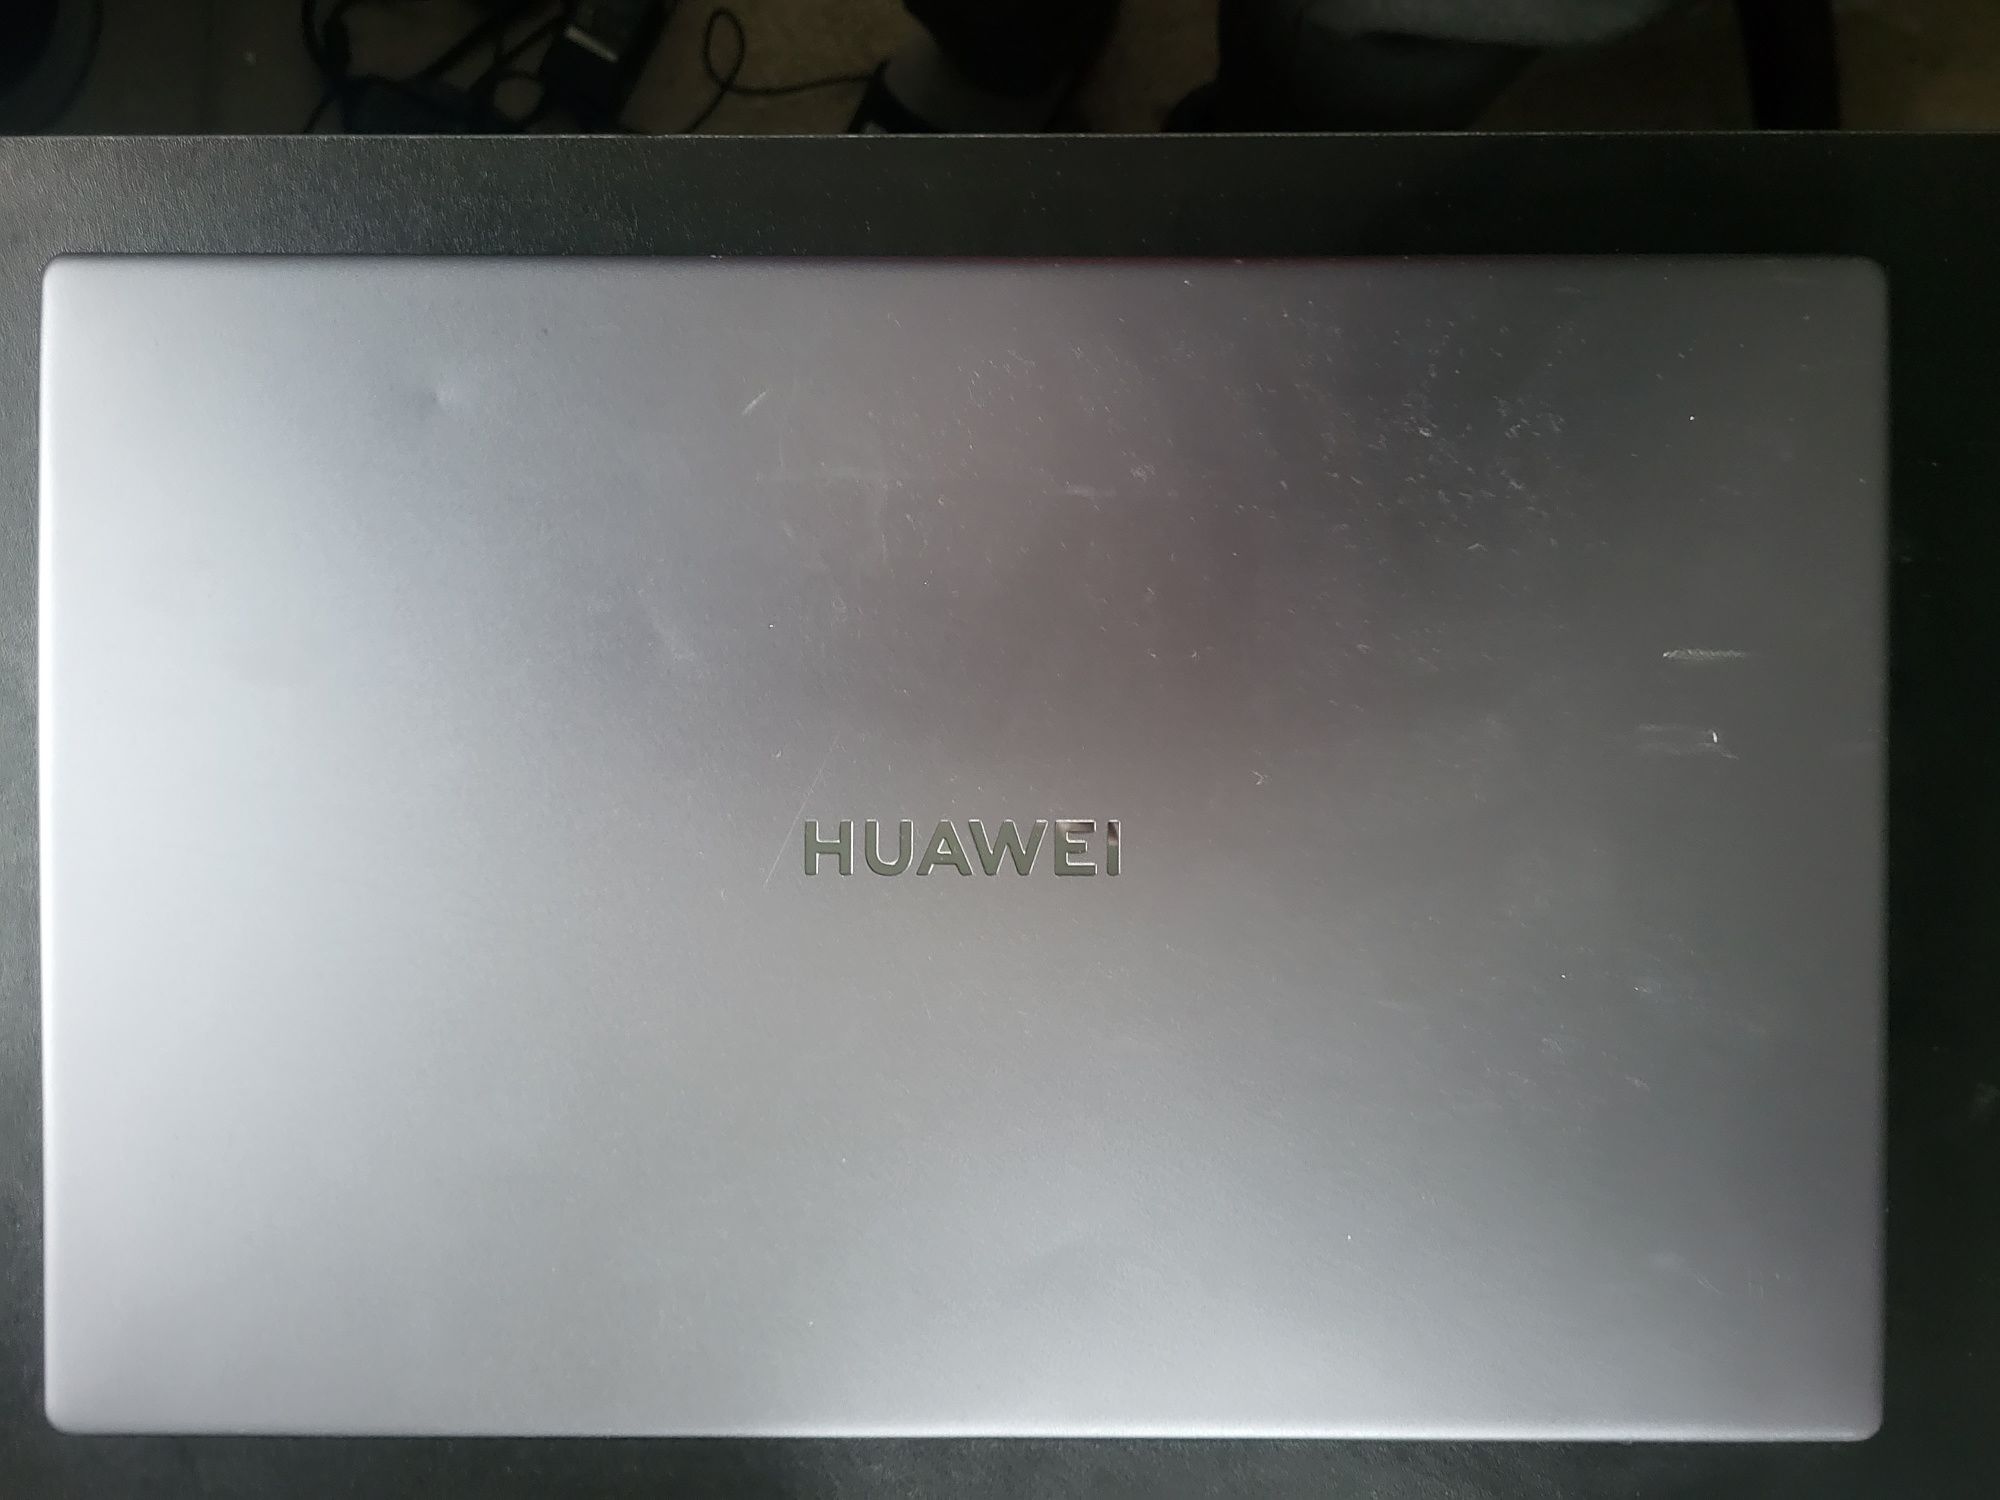 Sprzedam HUAWEI MateBook D15 boh-waq9r. Ryzen 5/8GB/256/WIN 11

Sprzed